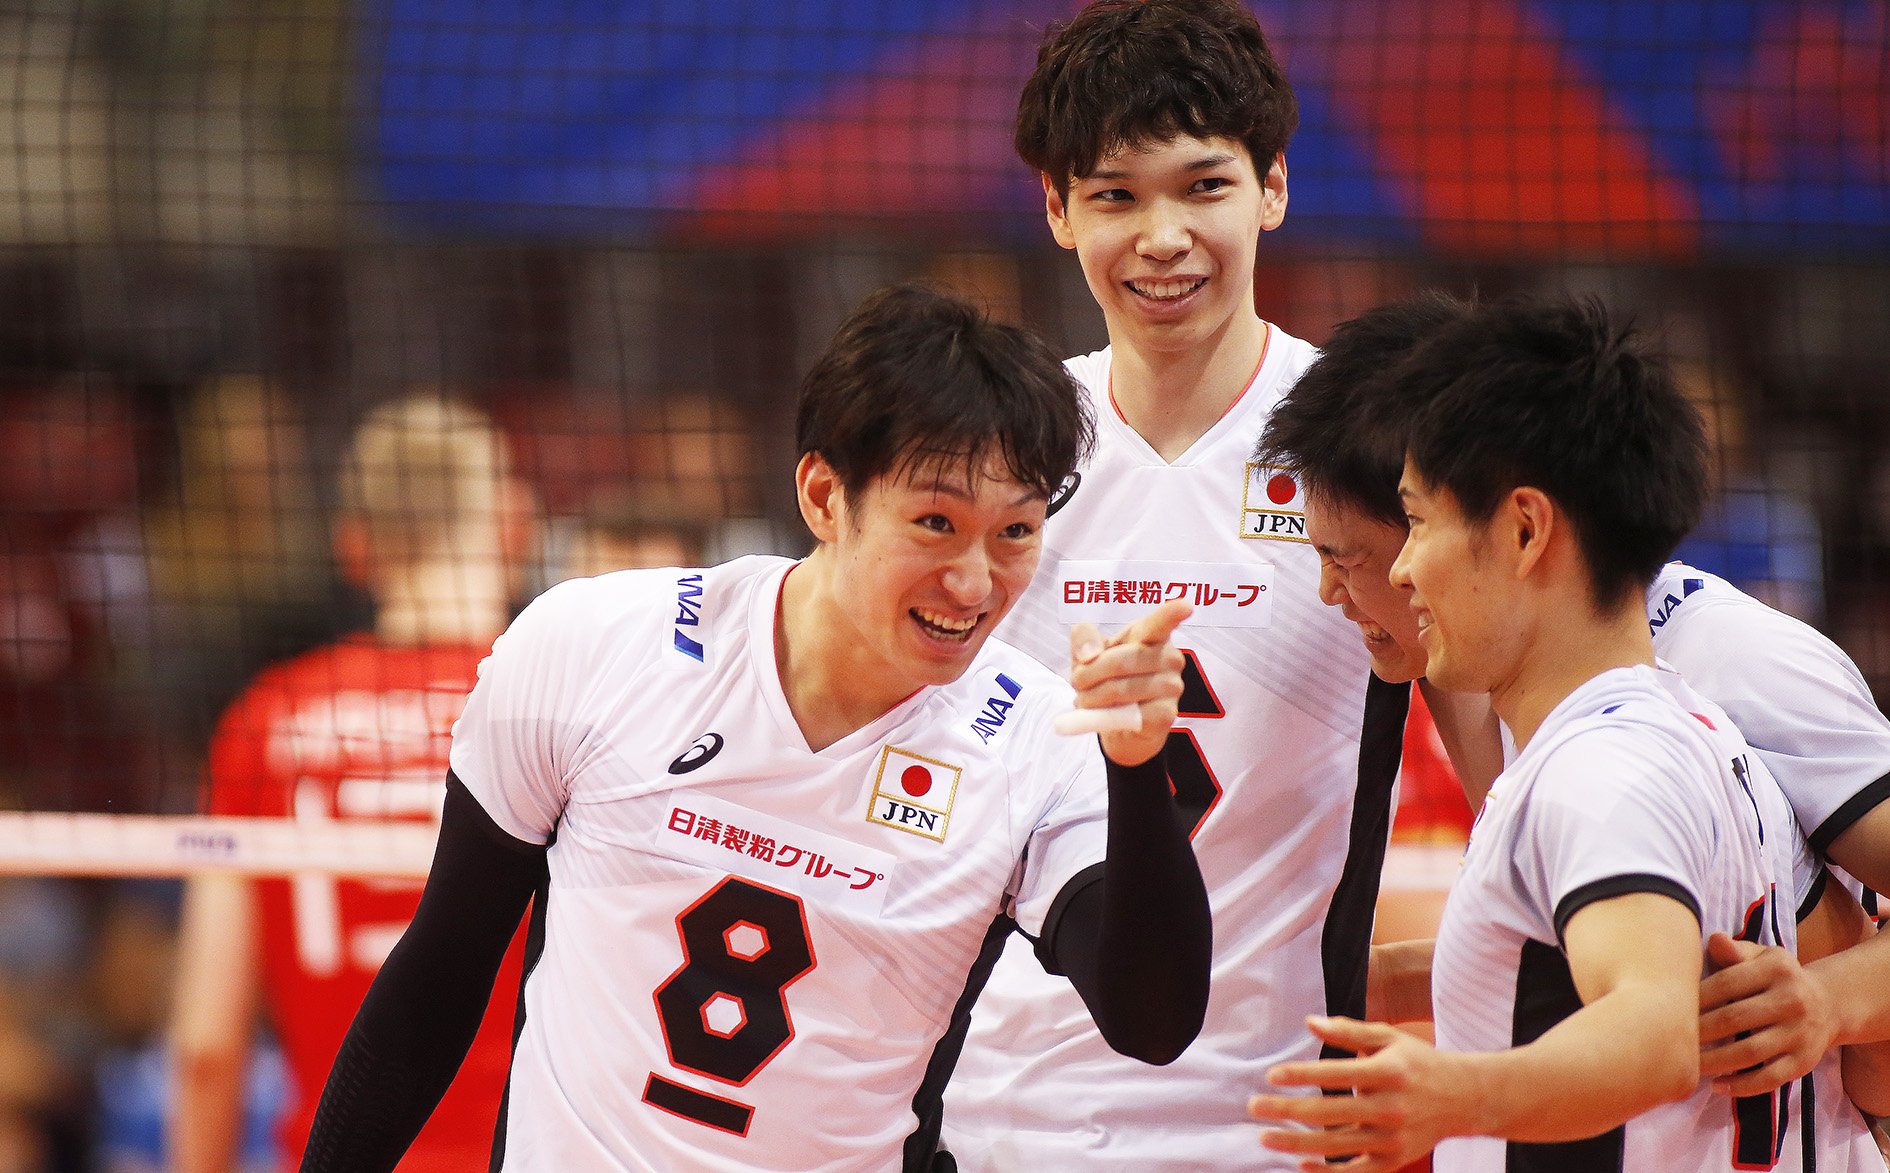 Япония волейбол мужчины. Юджи Нишида волейбол. Волейбол Нишида Япония. Юки Нишида волейболист. Масахиро Янагида.